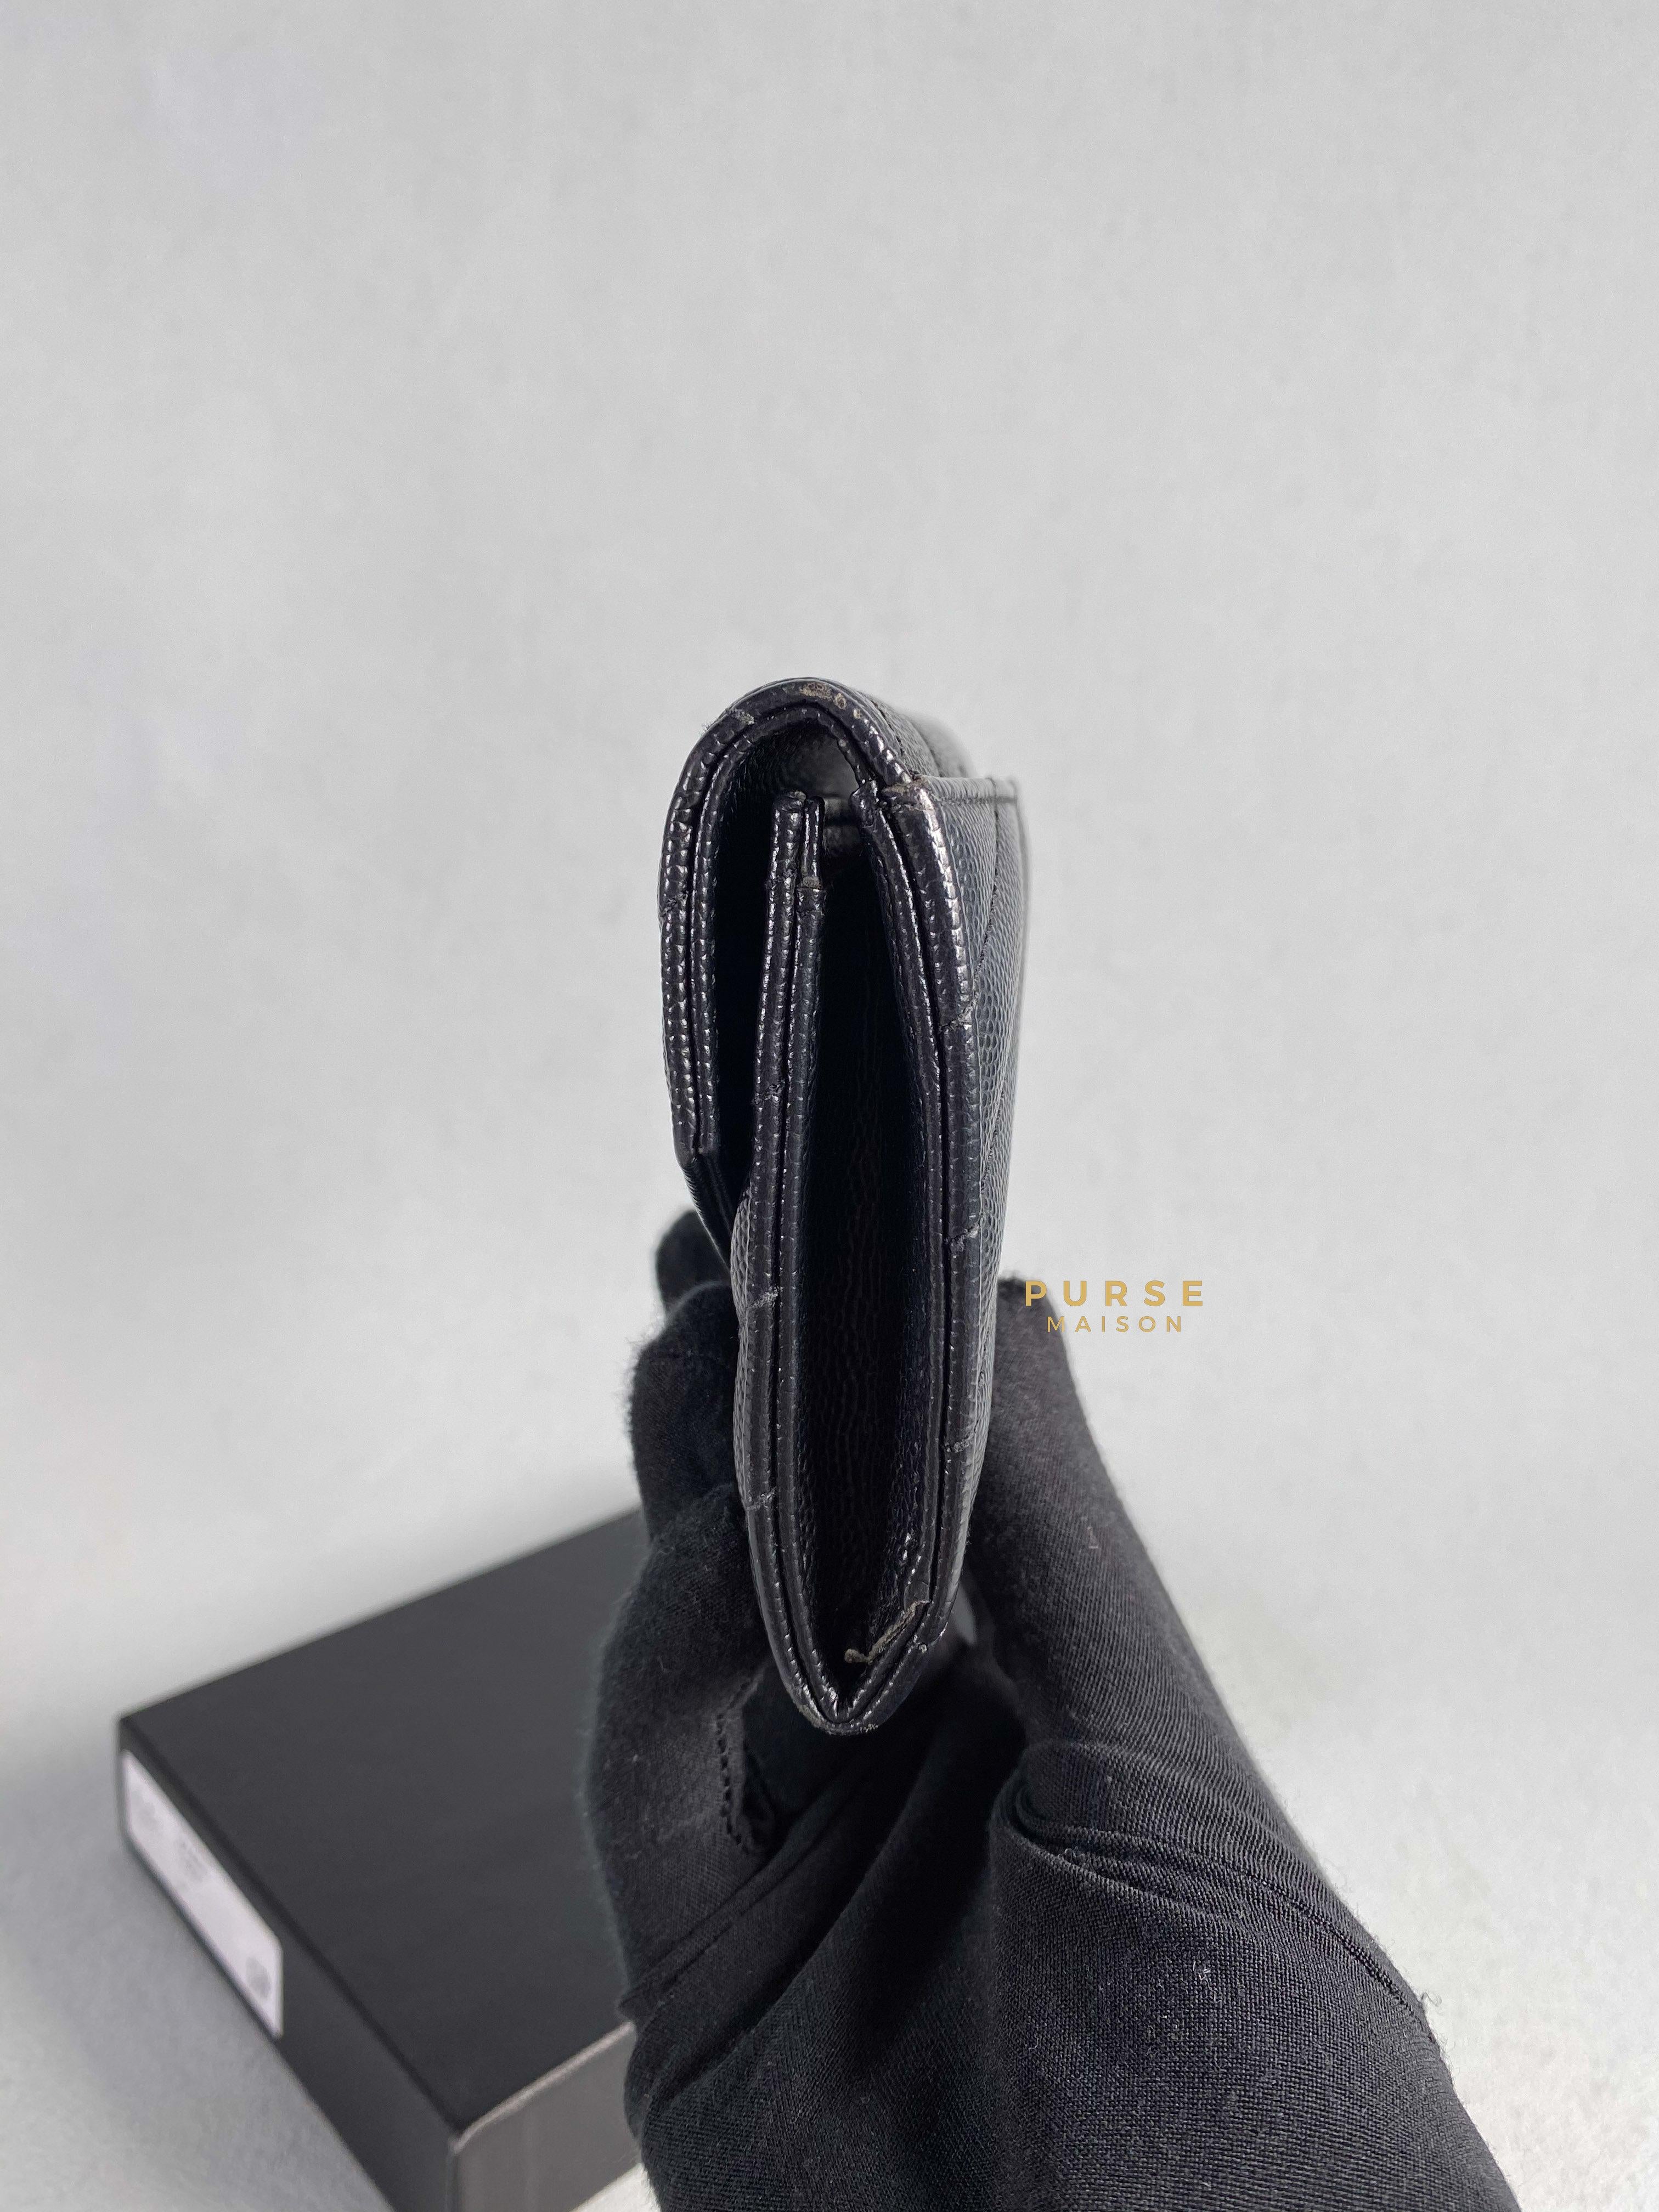 YSL Compact Flap Wallet Black Leather & Silver Hardware | Purse Maison Luxury Bags Shop